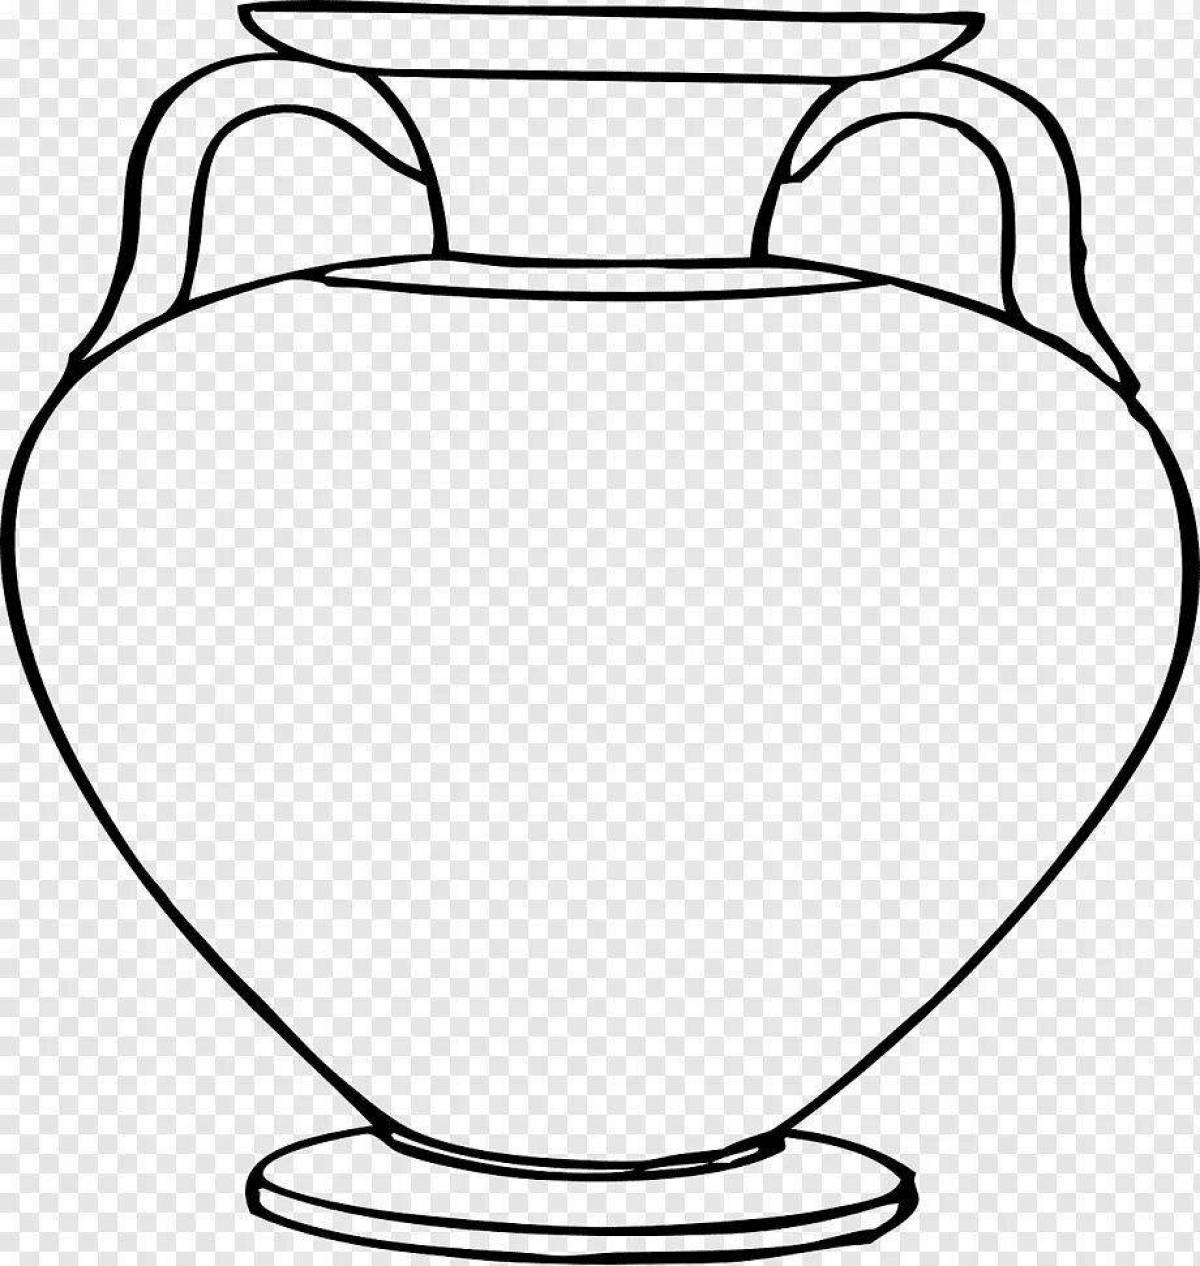 Coloring page elegant greek vase